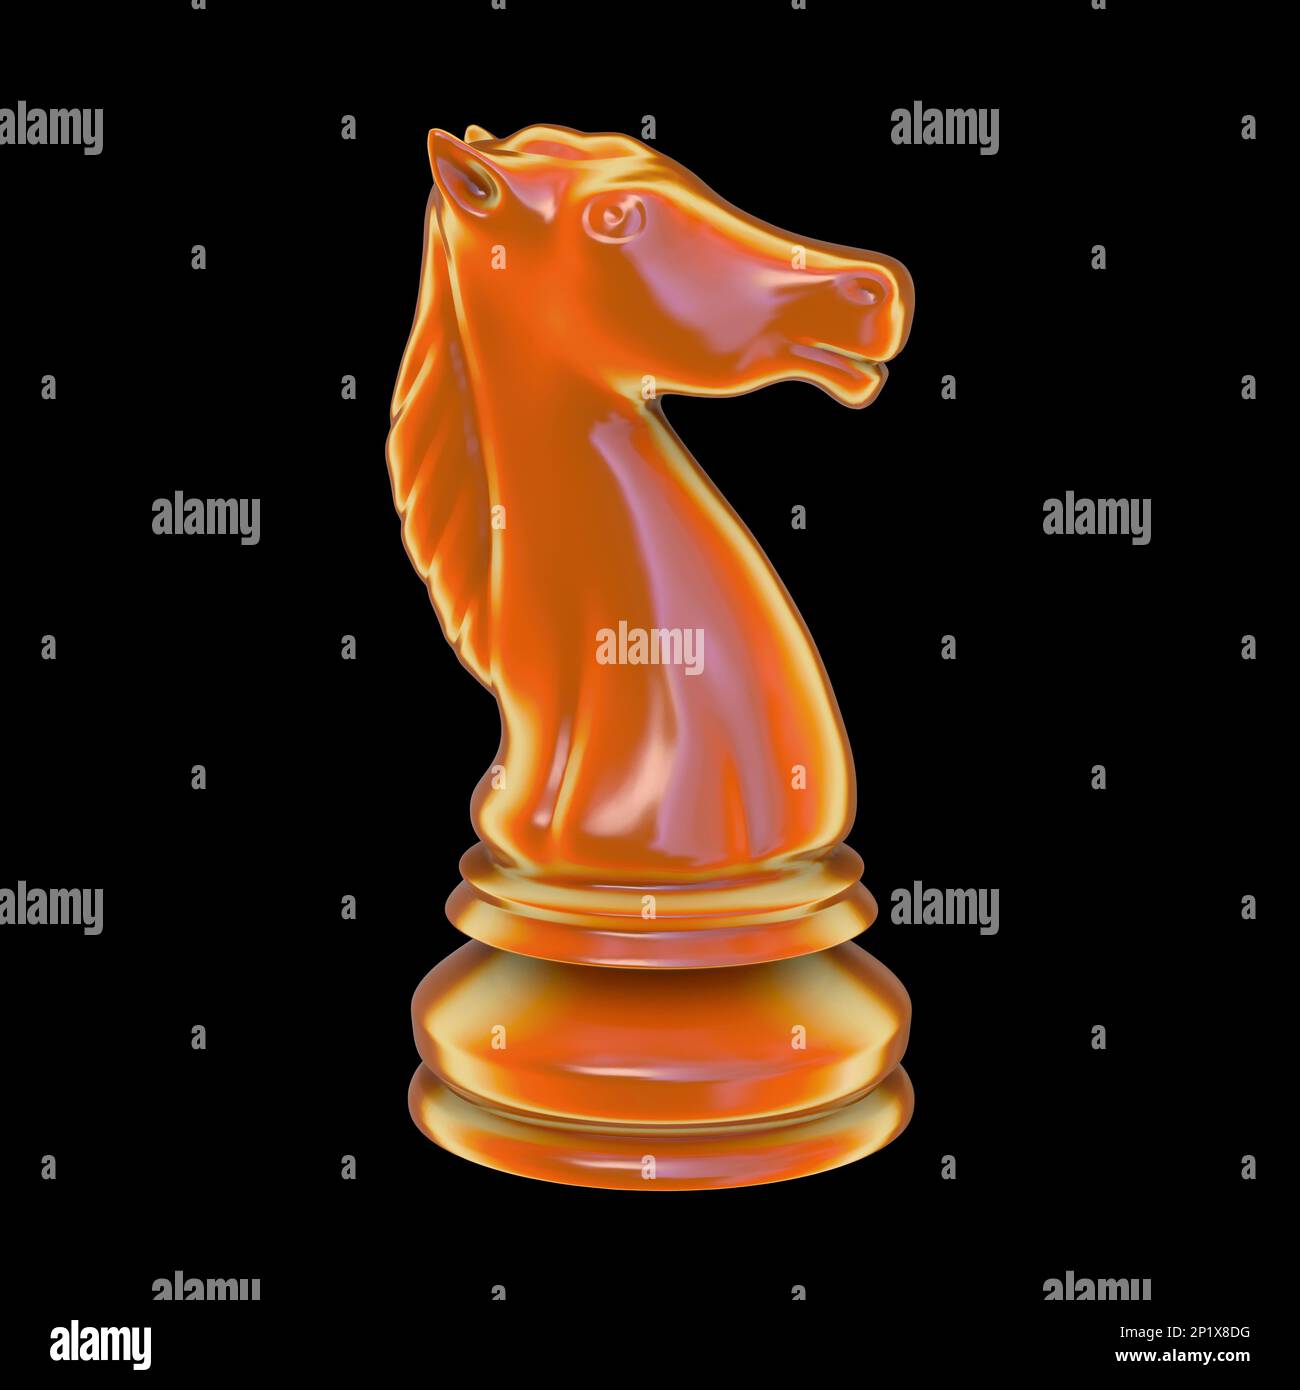 Chess knight, illustration Stock Photo